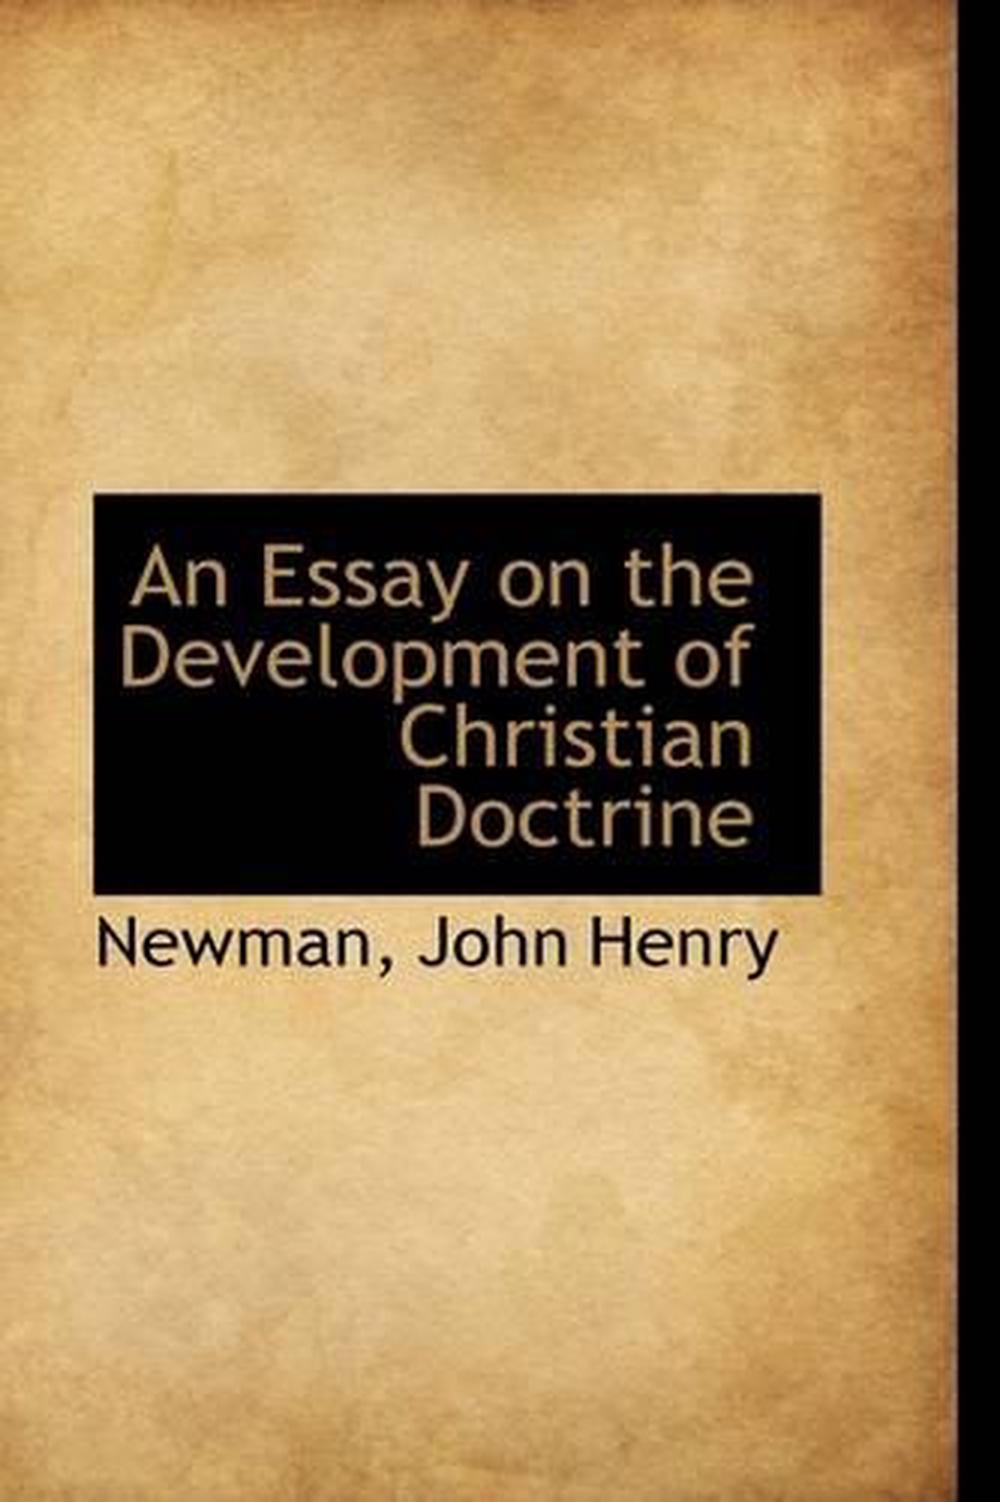 newman essay on development